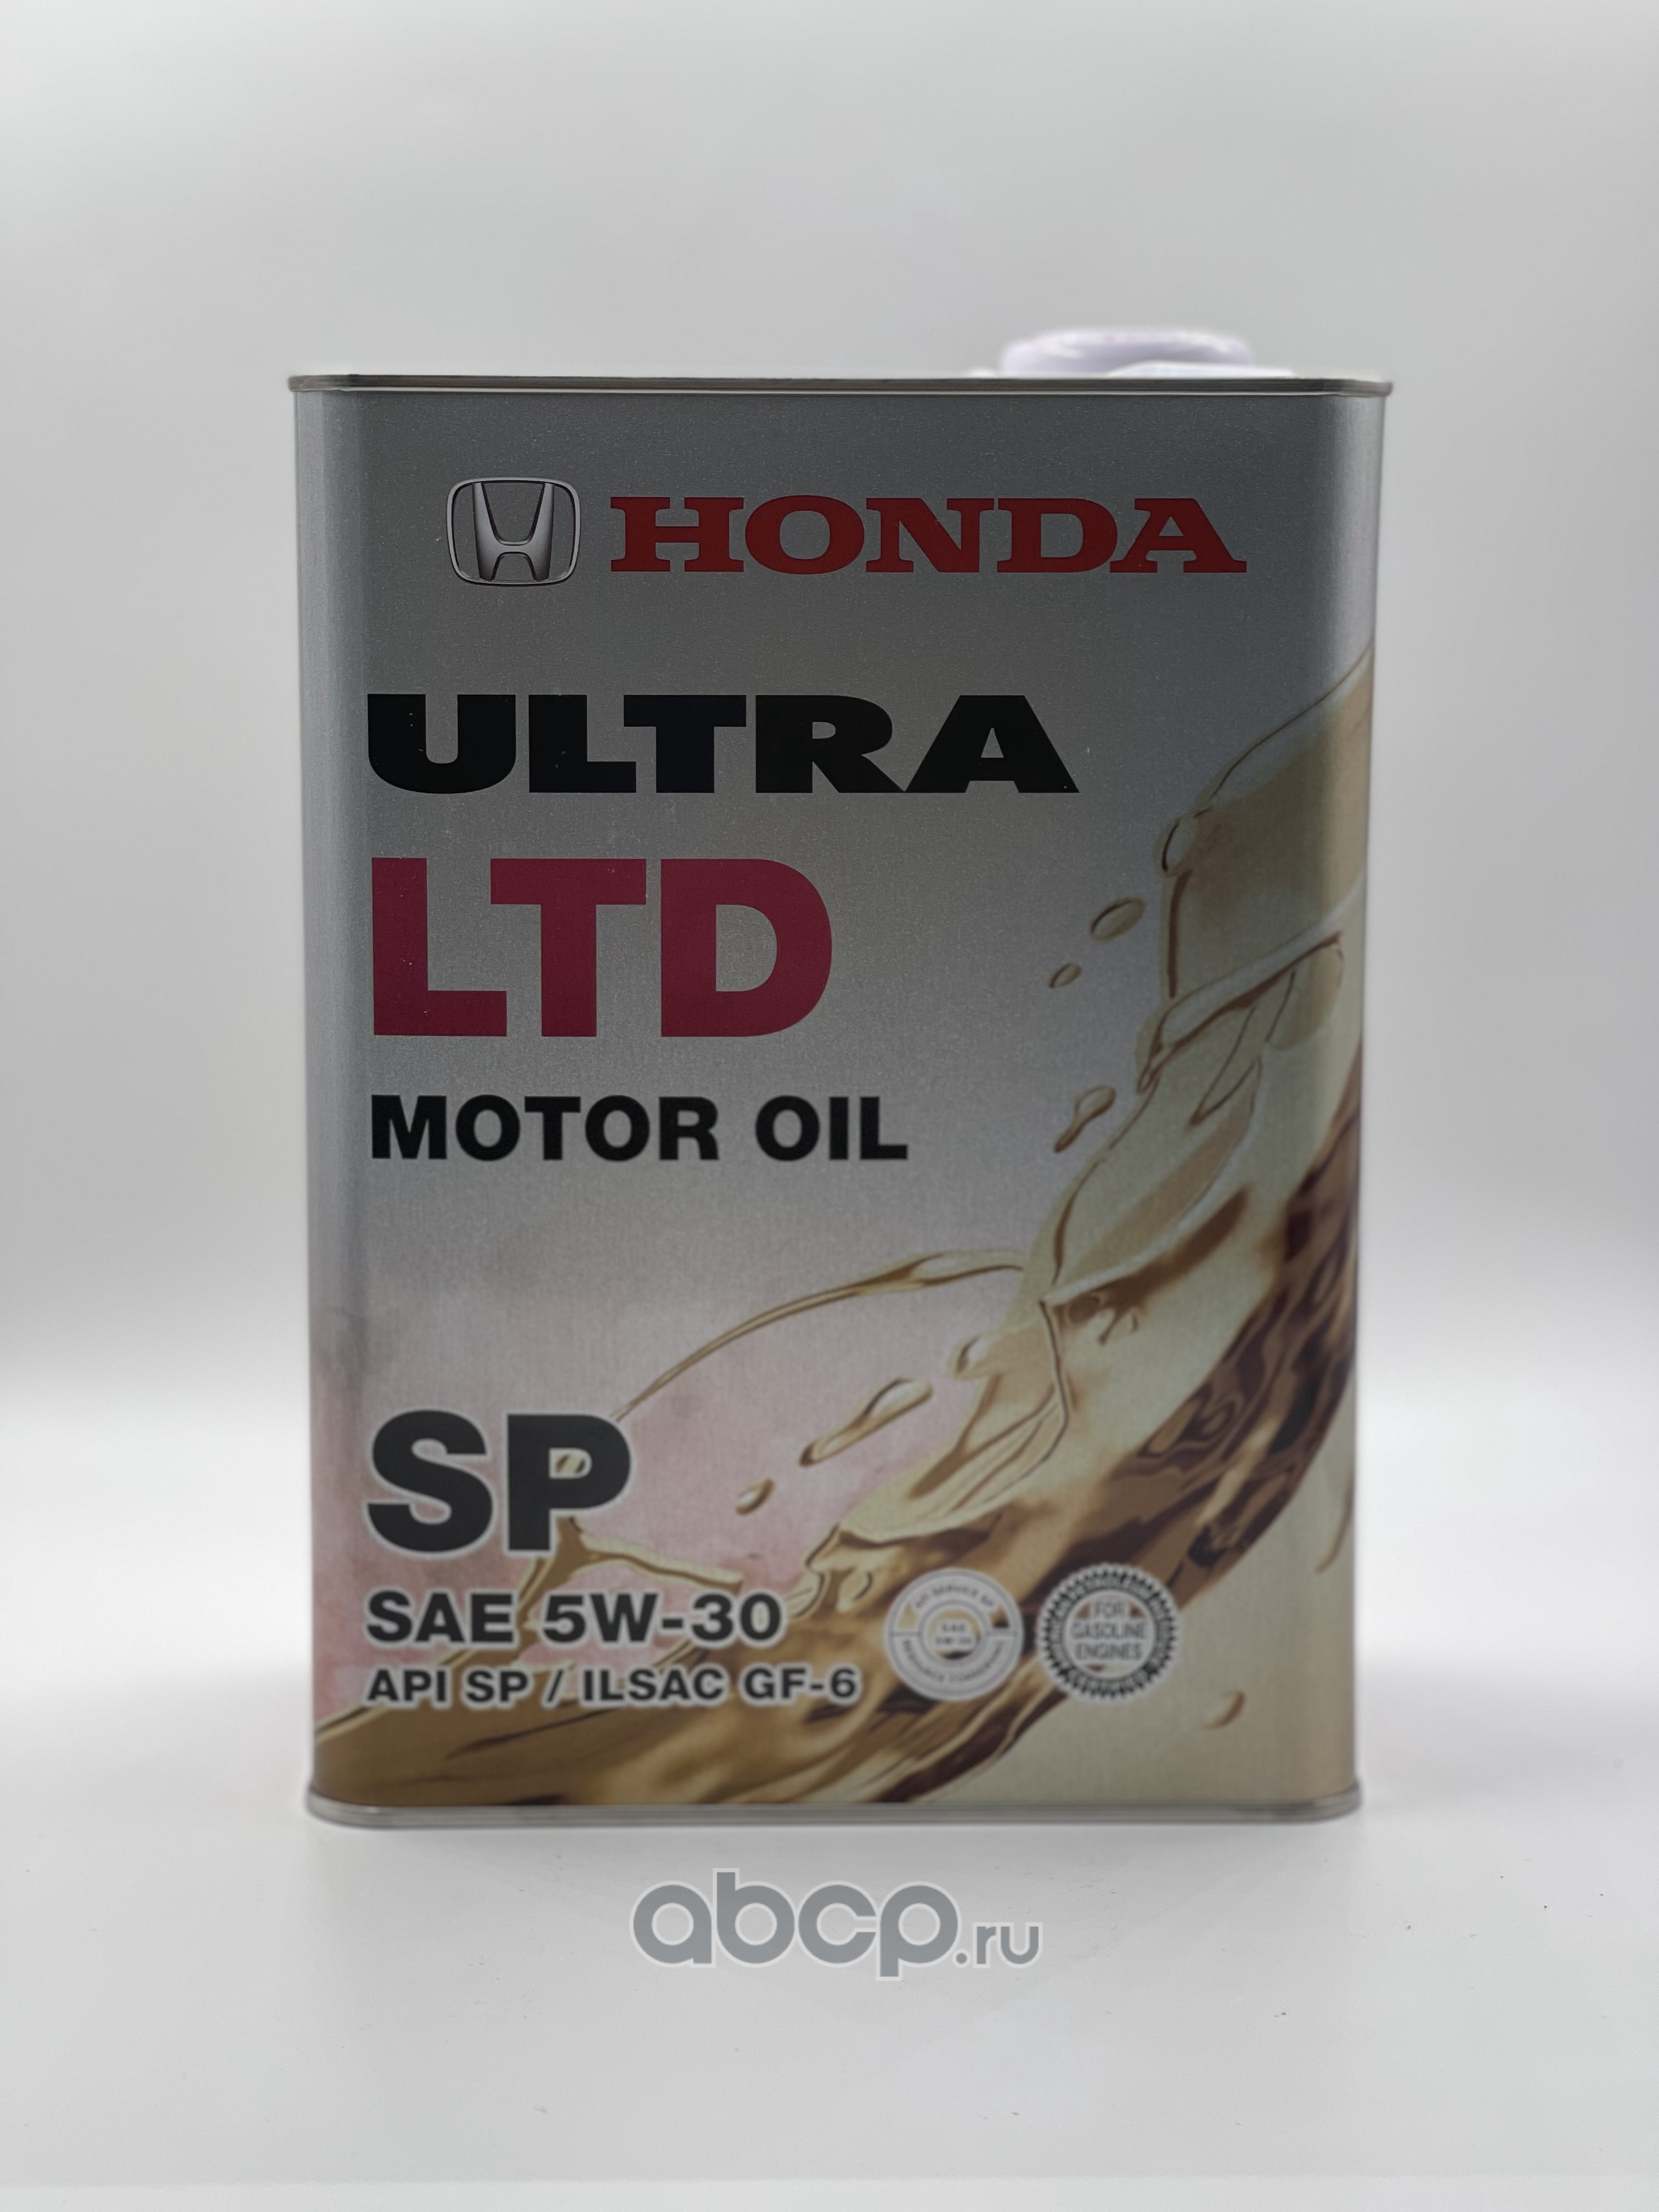 Моторное масло honda ultra. Honda Ultra Ltd 5w30 SN 4л. Honda Ultra Ltd 5w30 SP. Honda Ultra Ltd 5w30 SP gf-6a. Honda Ultra Ltd 5w-30 SP 4л.